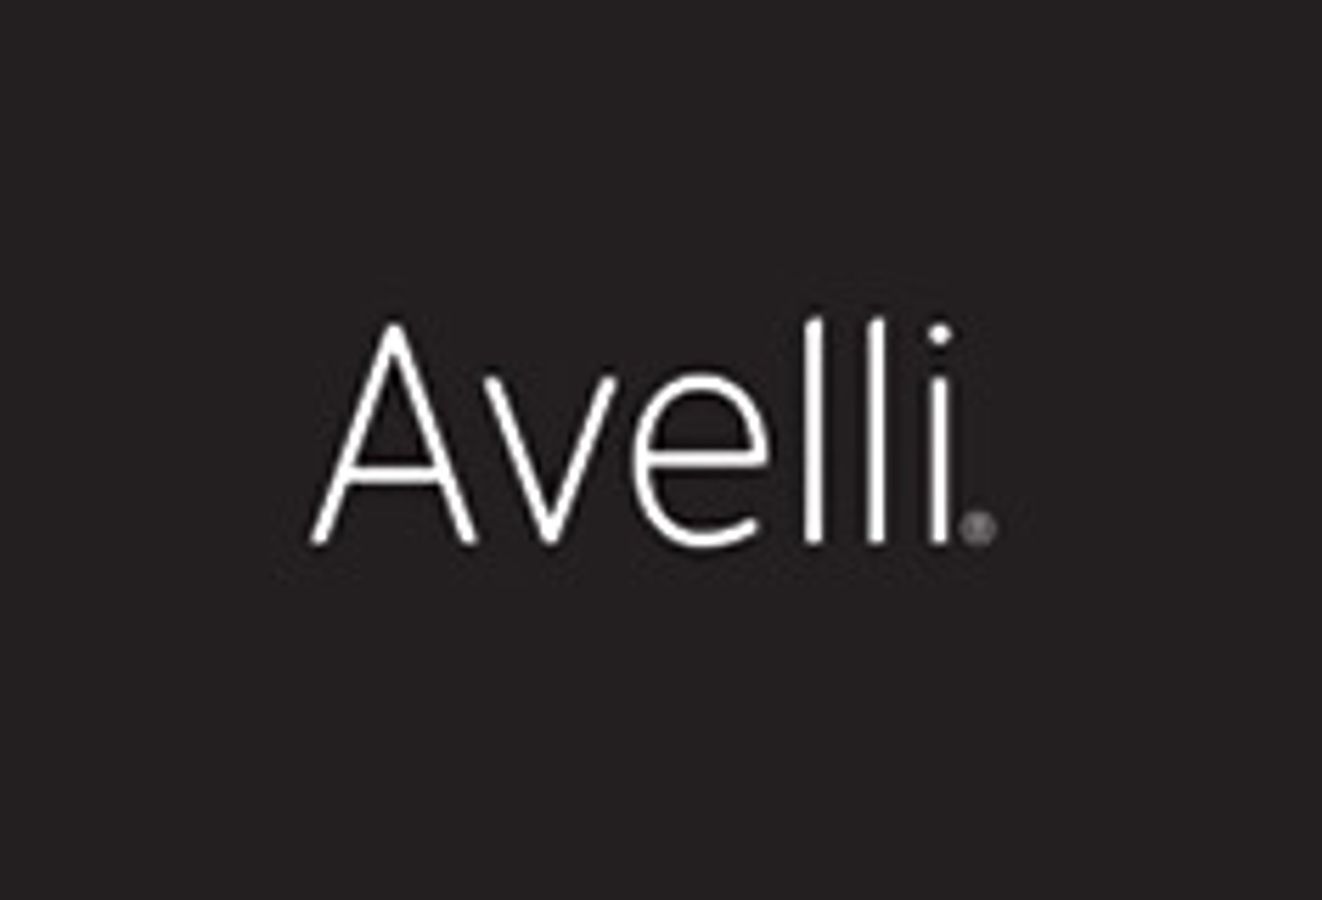 Avelli Inc.